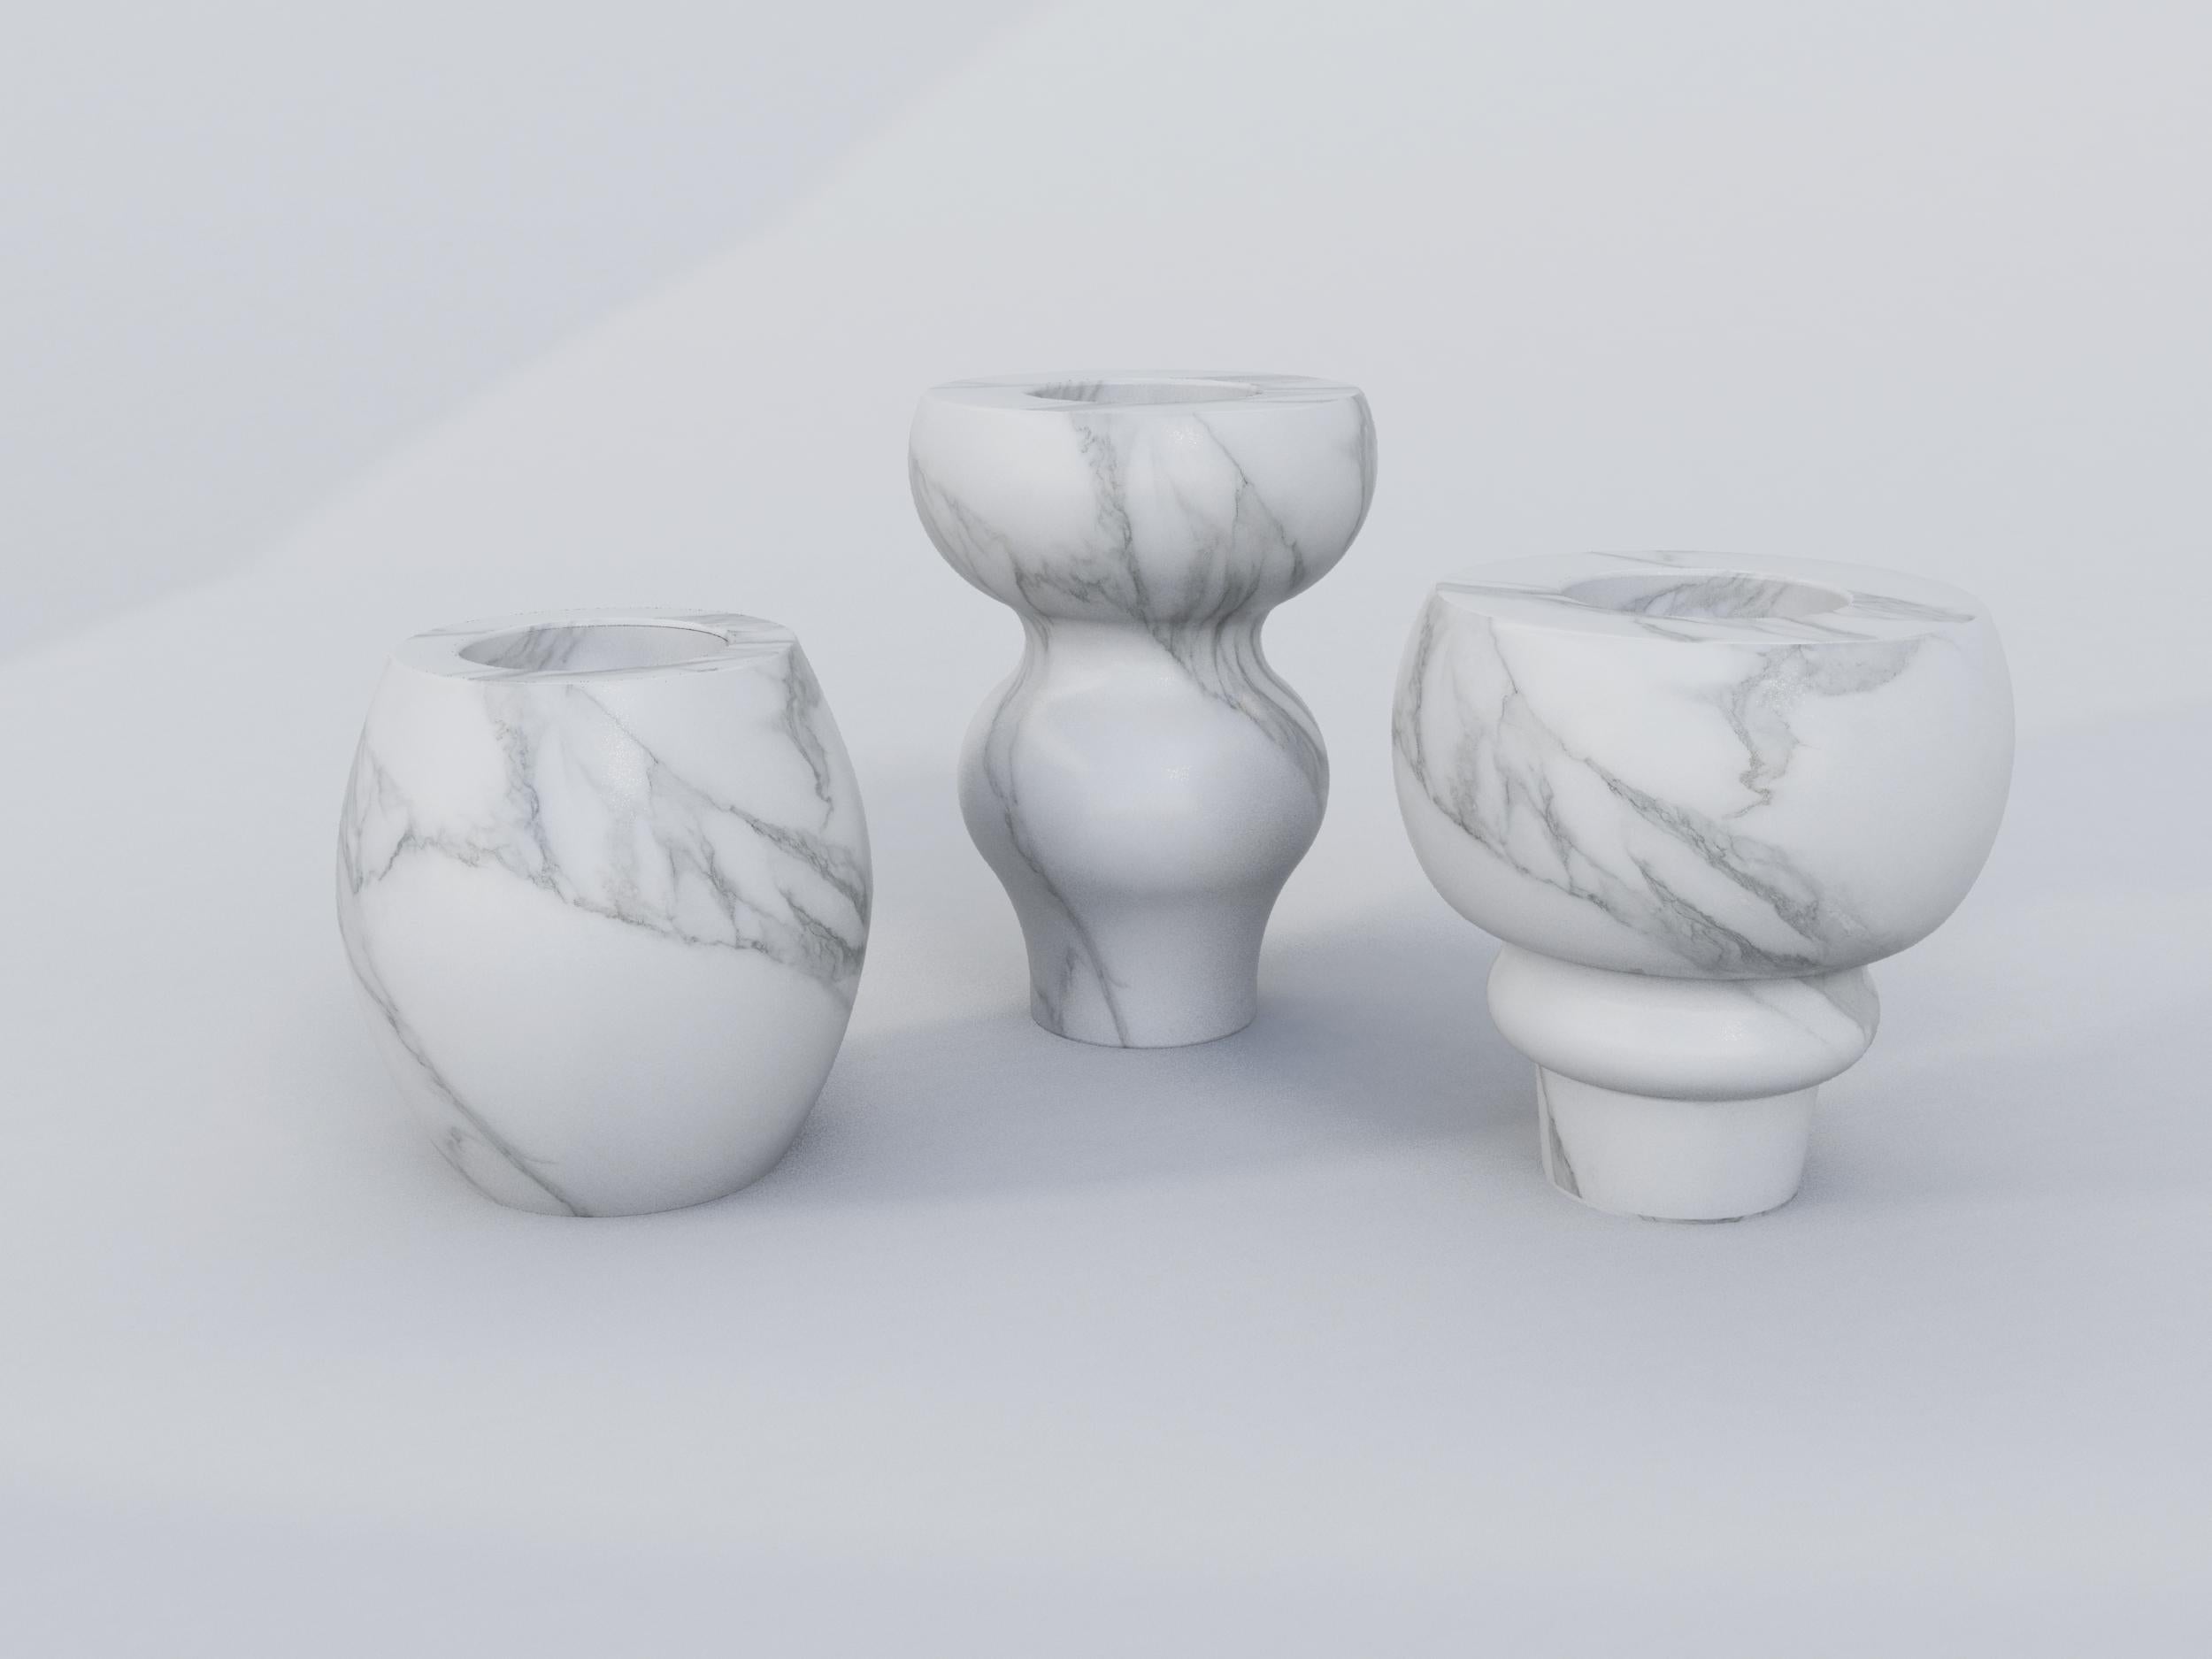 Marble Egg cup designed by Feix & Merlin.

Size: Diameter cm 8 x 8 height
Materials: White Carrara
Designed by: Feix & Merlin.